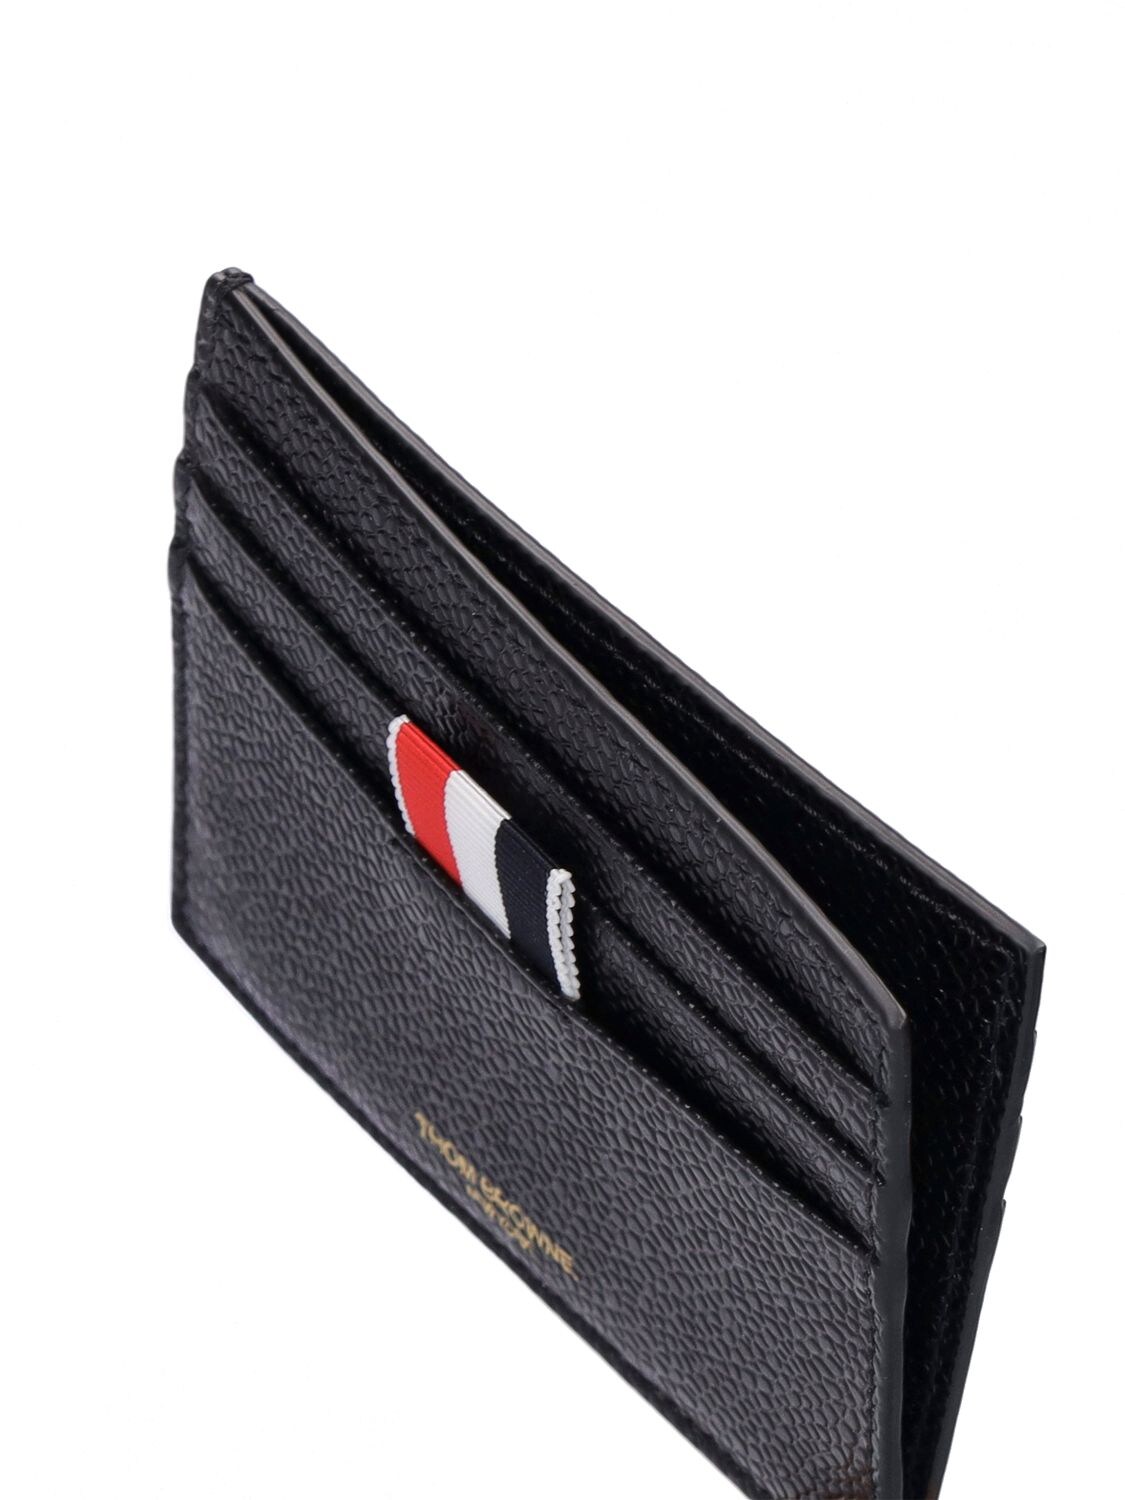 Shop Thom Browne Pebble Leather Credit Card Holder In Black